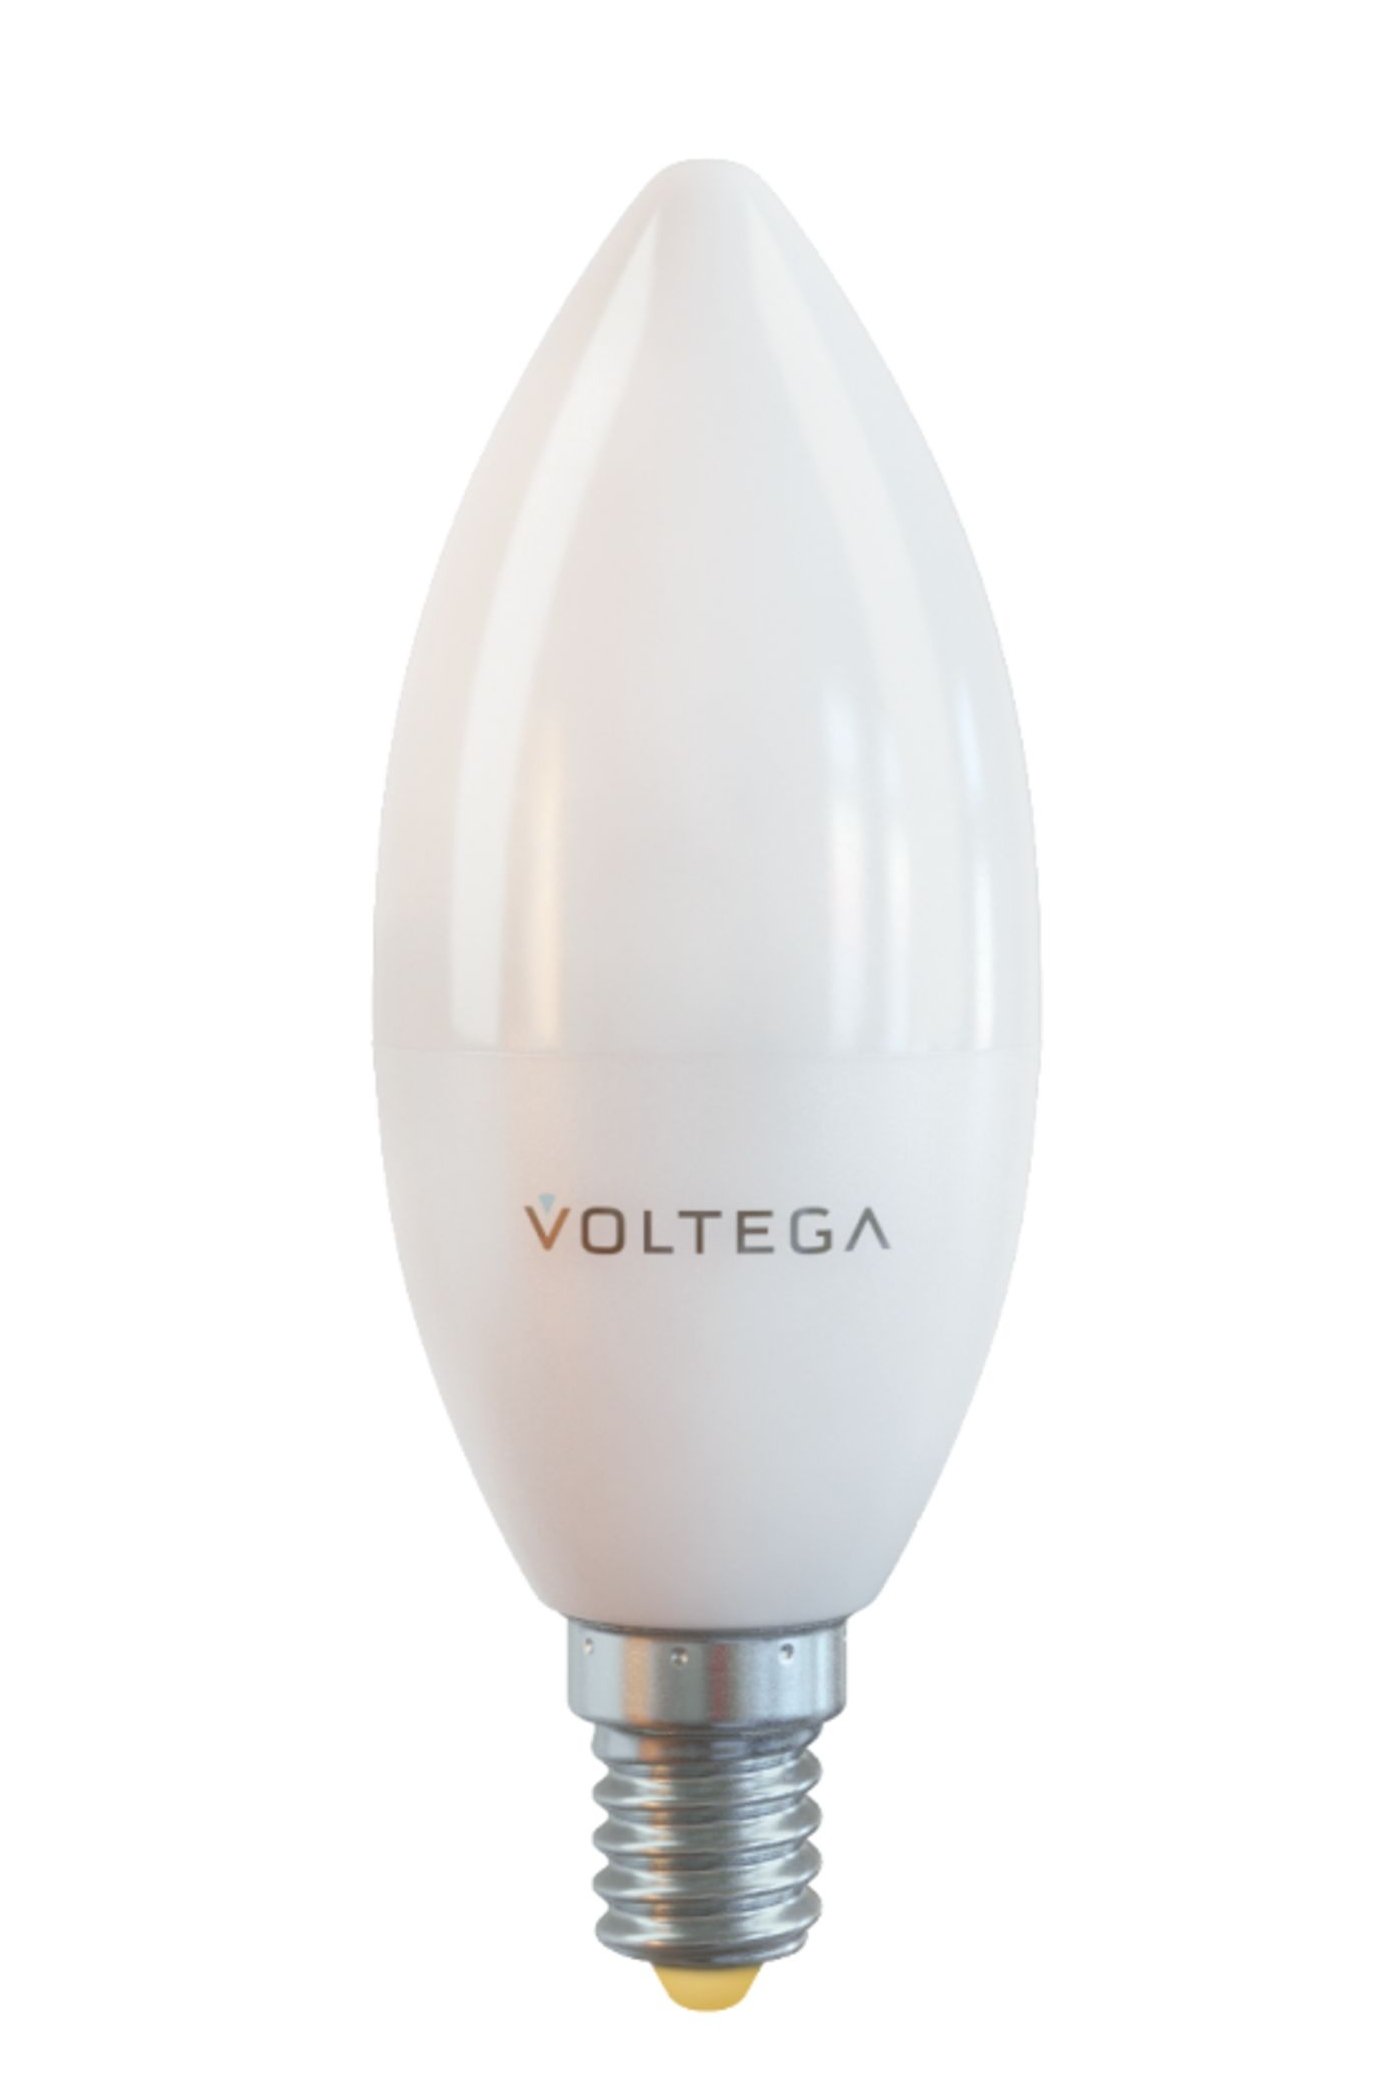   
                        Лампа VOLTEGA  17068    
                        .  
                                                                                                Матеріал: пластик.                          фото 1